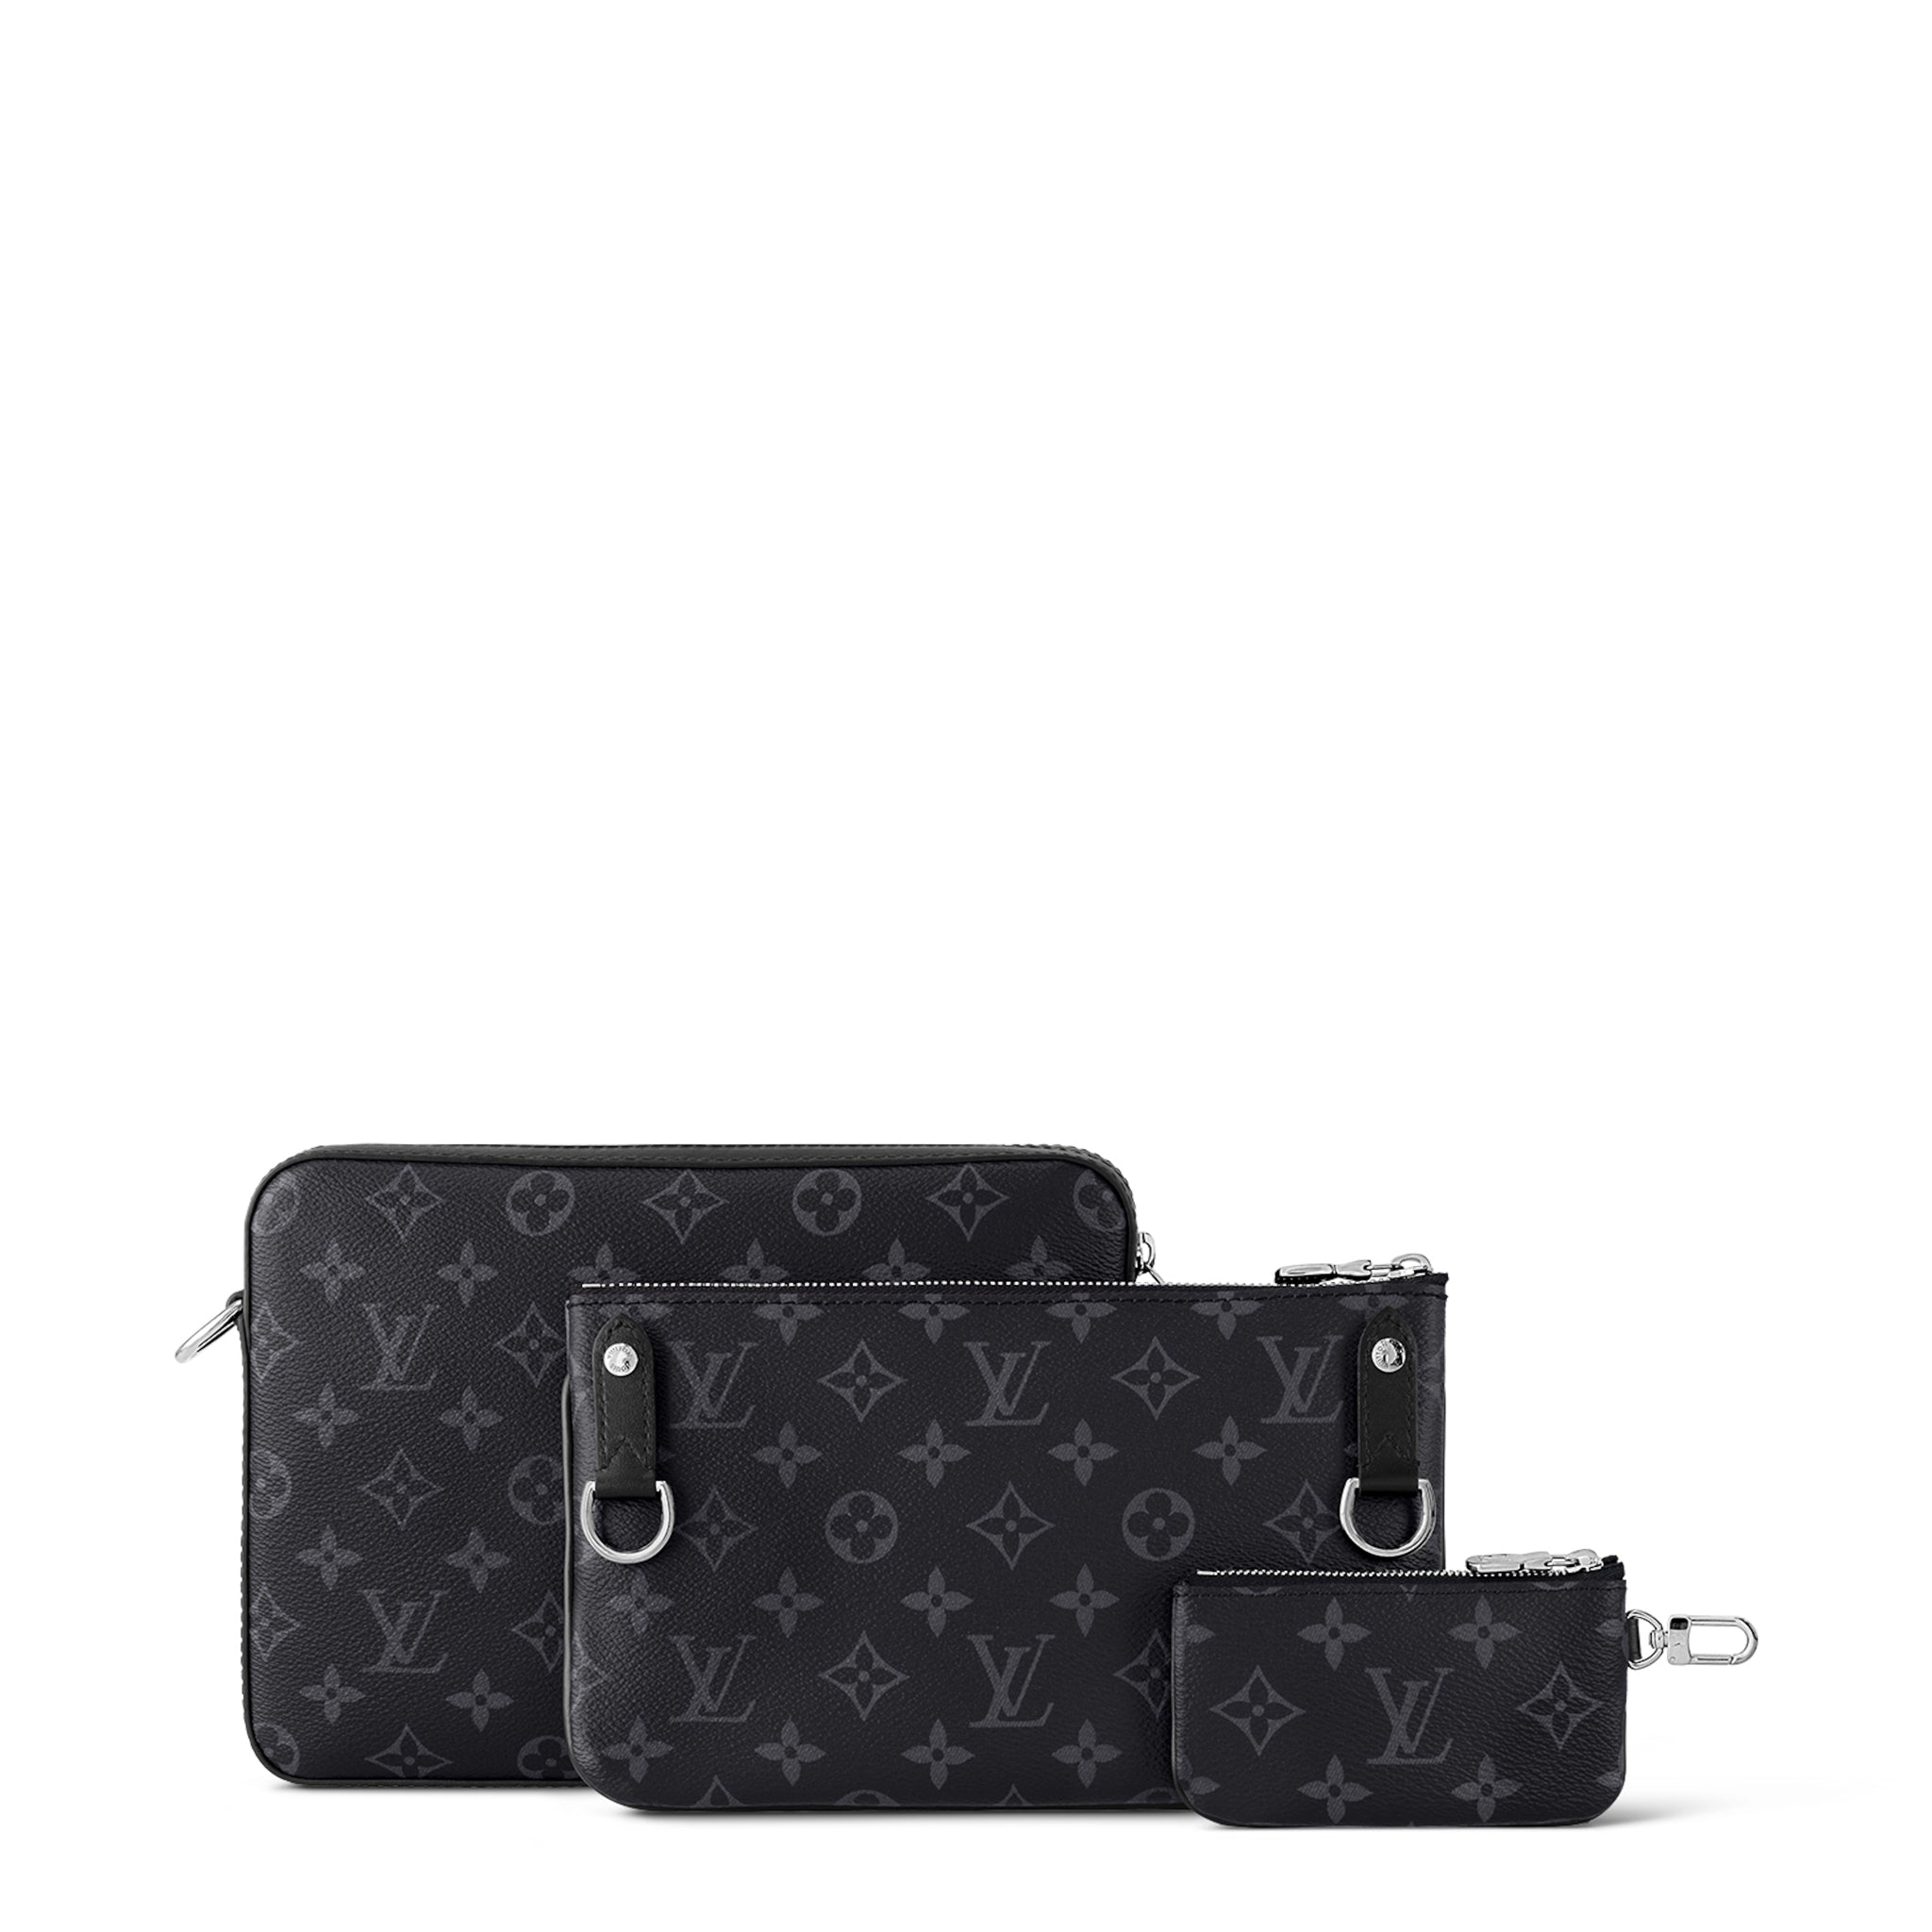 Back view of Louis Vuitton Monogram Trio Messenger Bag Black Grey NVPROD2320039V